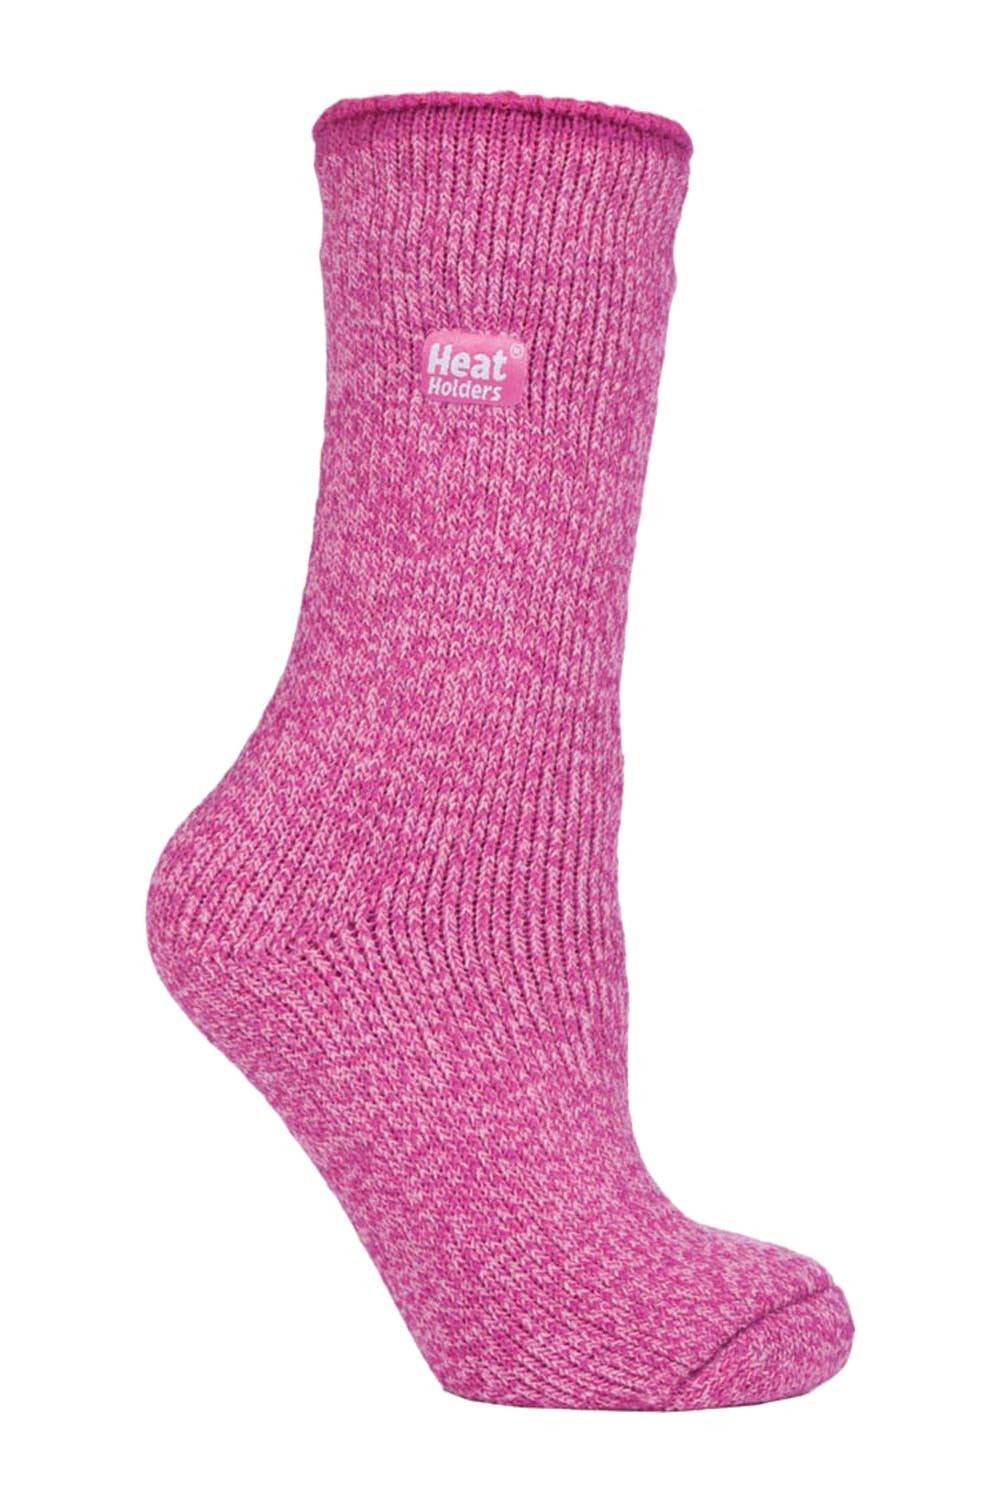 Womens Merino Wool Thermal Socks